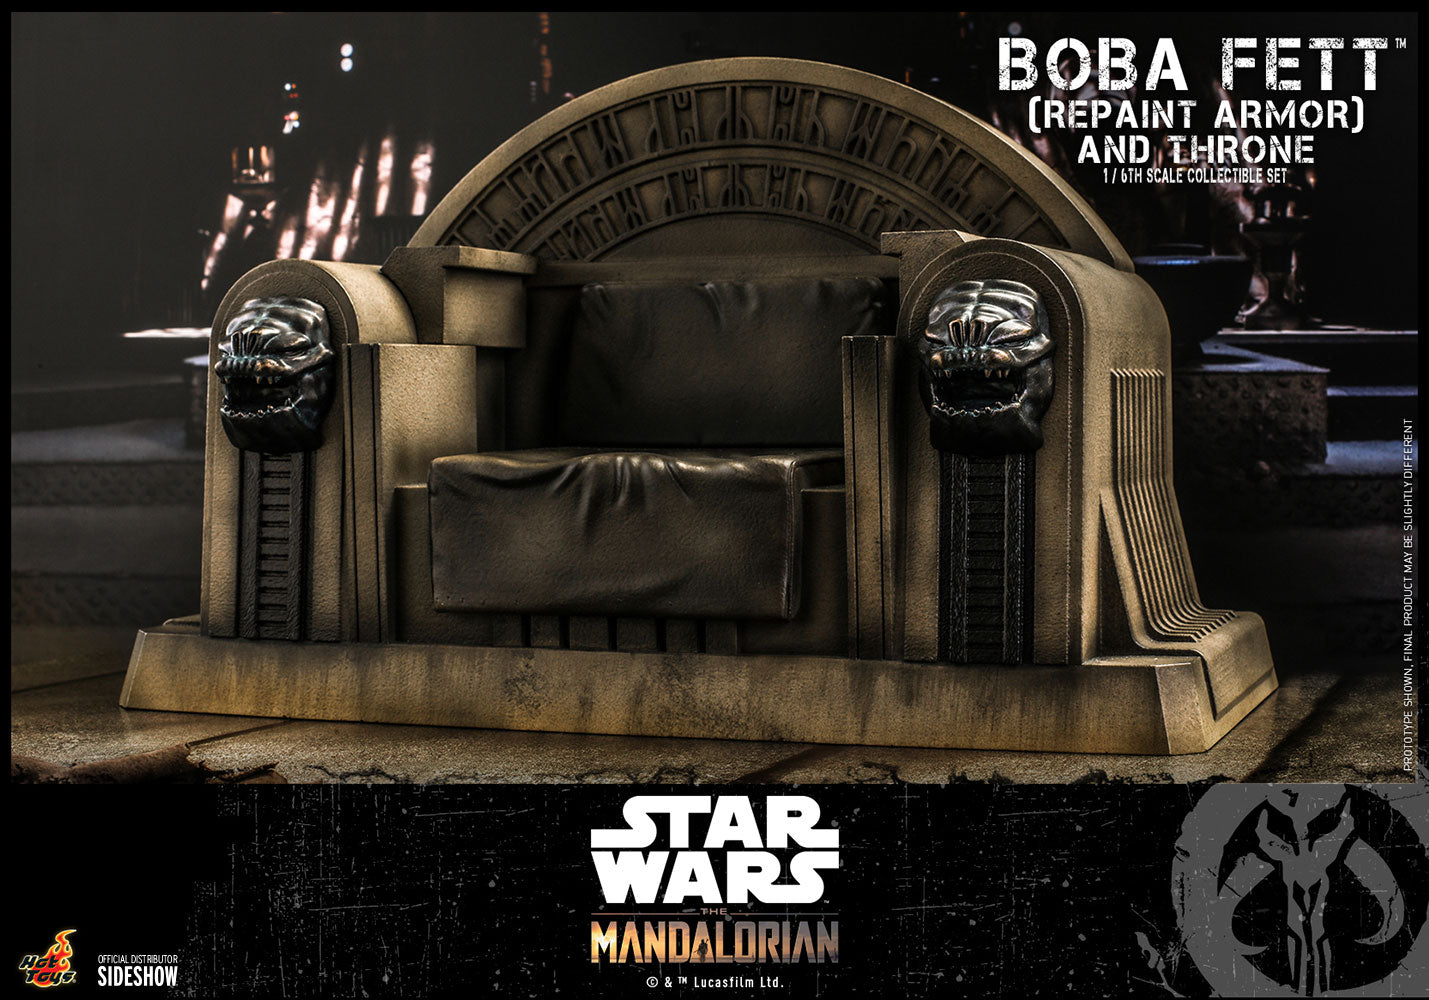 Boba Fett & Throne (Star Wars: The Mandalorian) 1:6 Set by Hot Toys